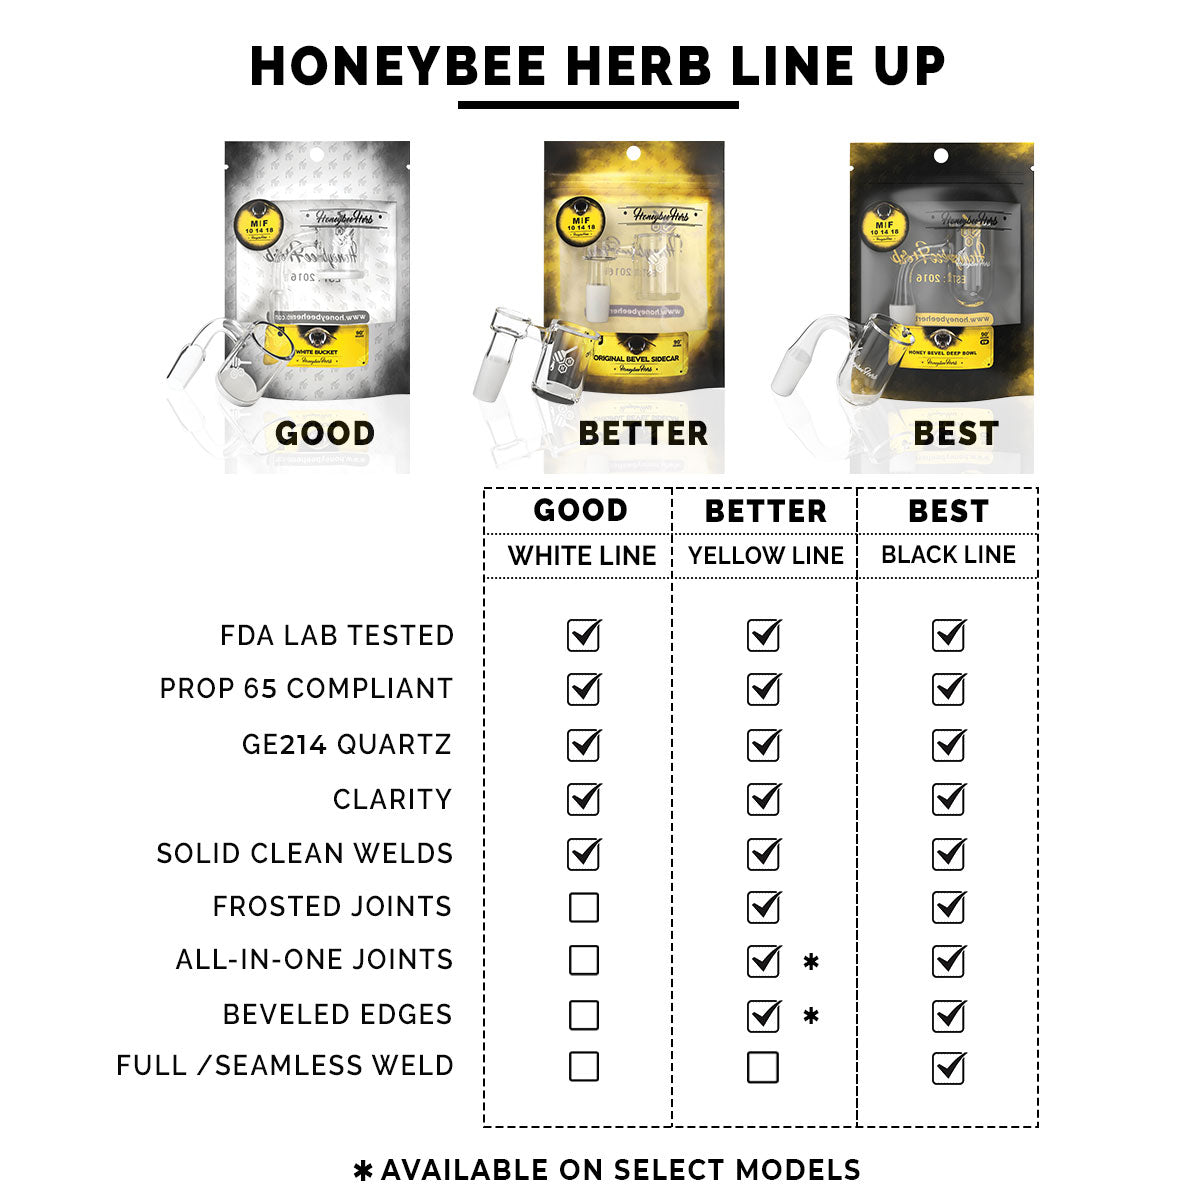 Honeybee Herb quartz banger comparison chart, showcasing quality tiers for dab rig accessories.